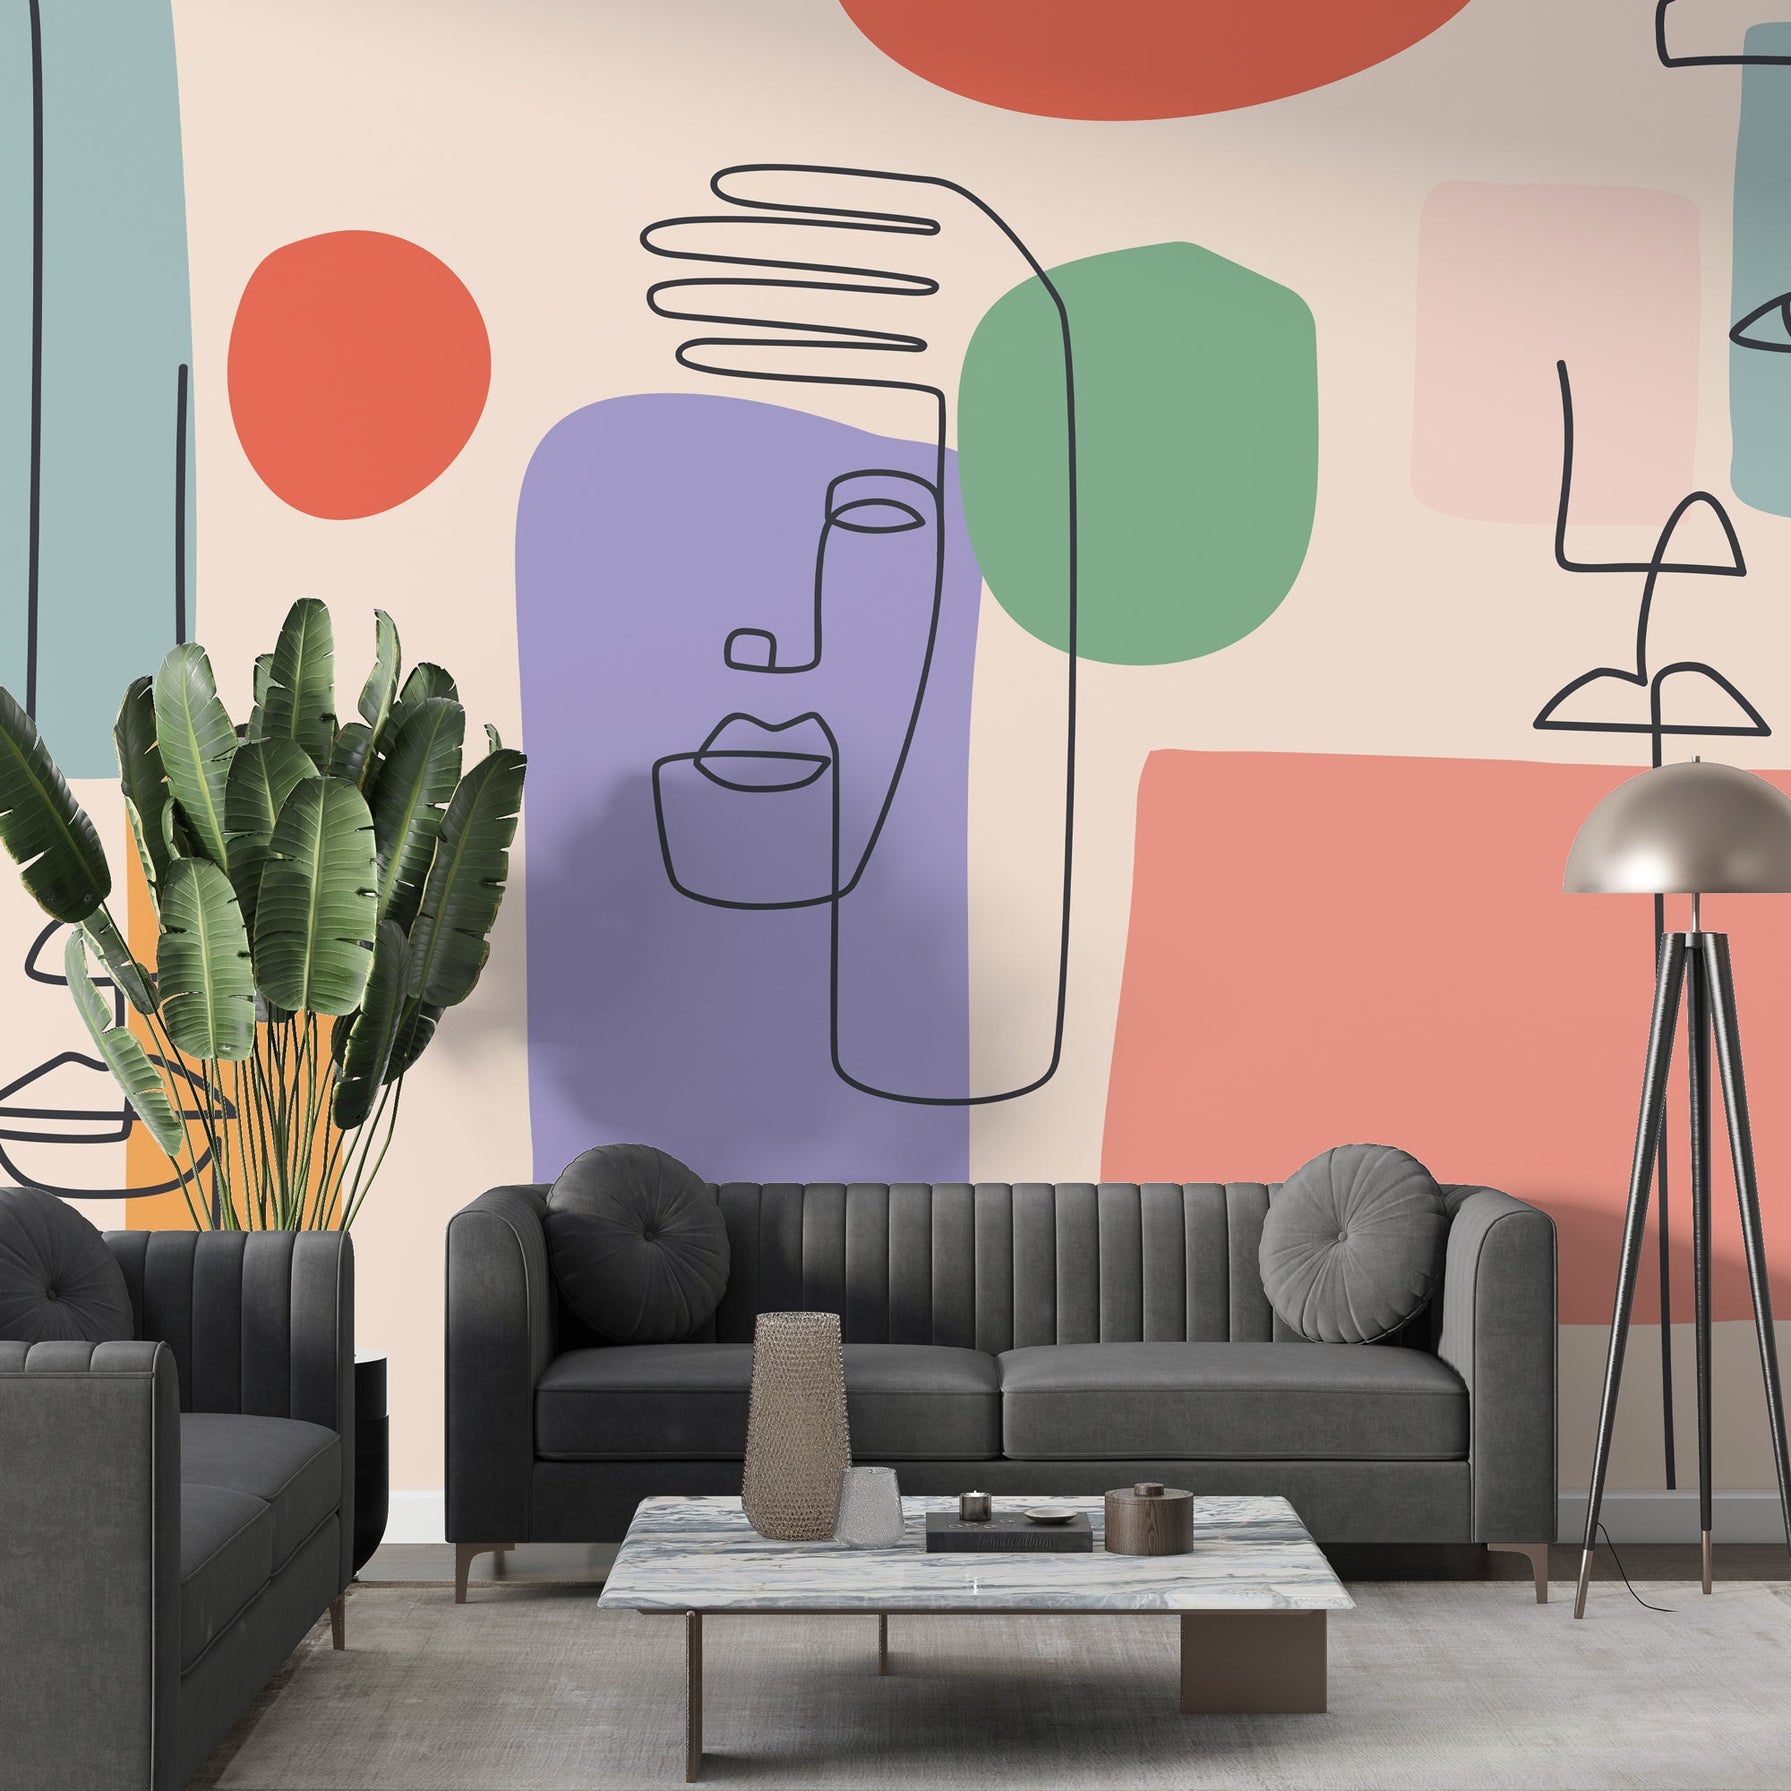 Matisse Wallpaper Mural: Vibrant Artistry for Your Walls